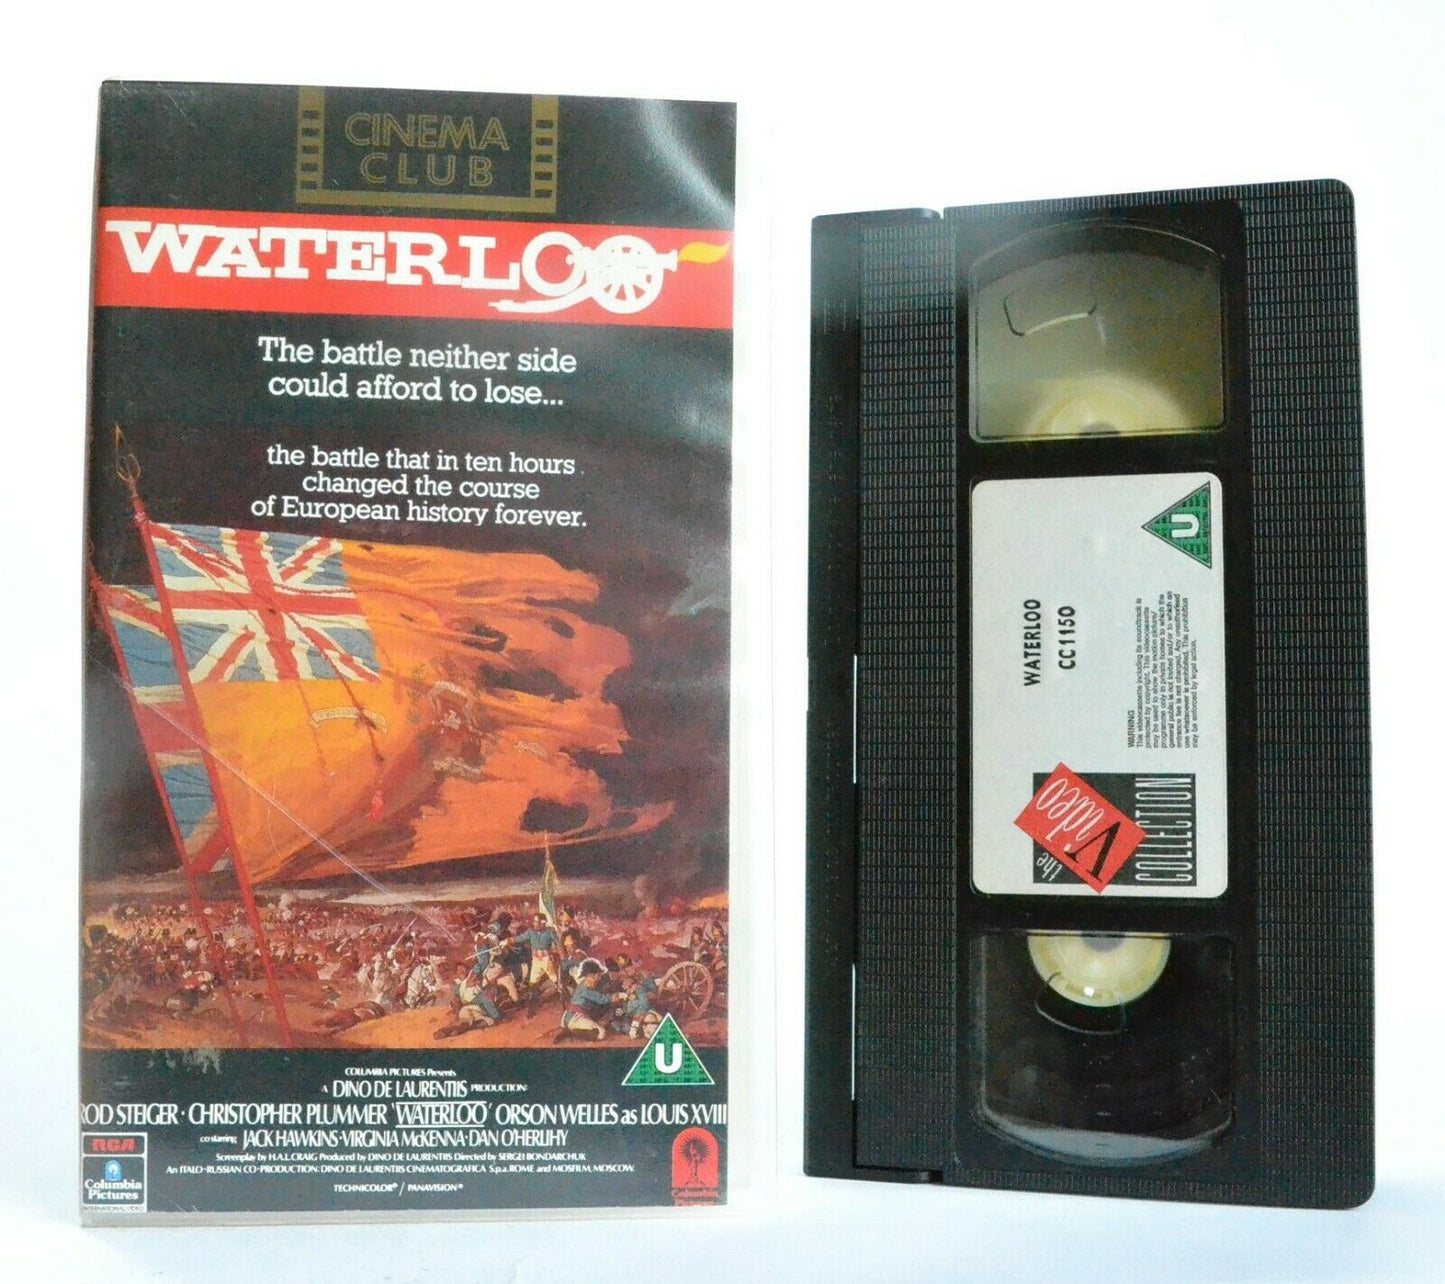 Waterloo: Napoleon's Exile To Alba (1814) - R.Steiger - War Epic - Pal VHS-